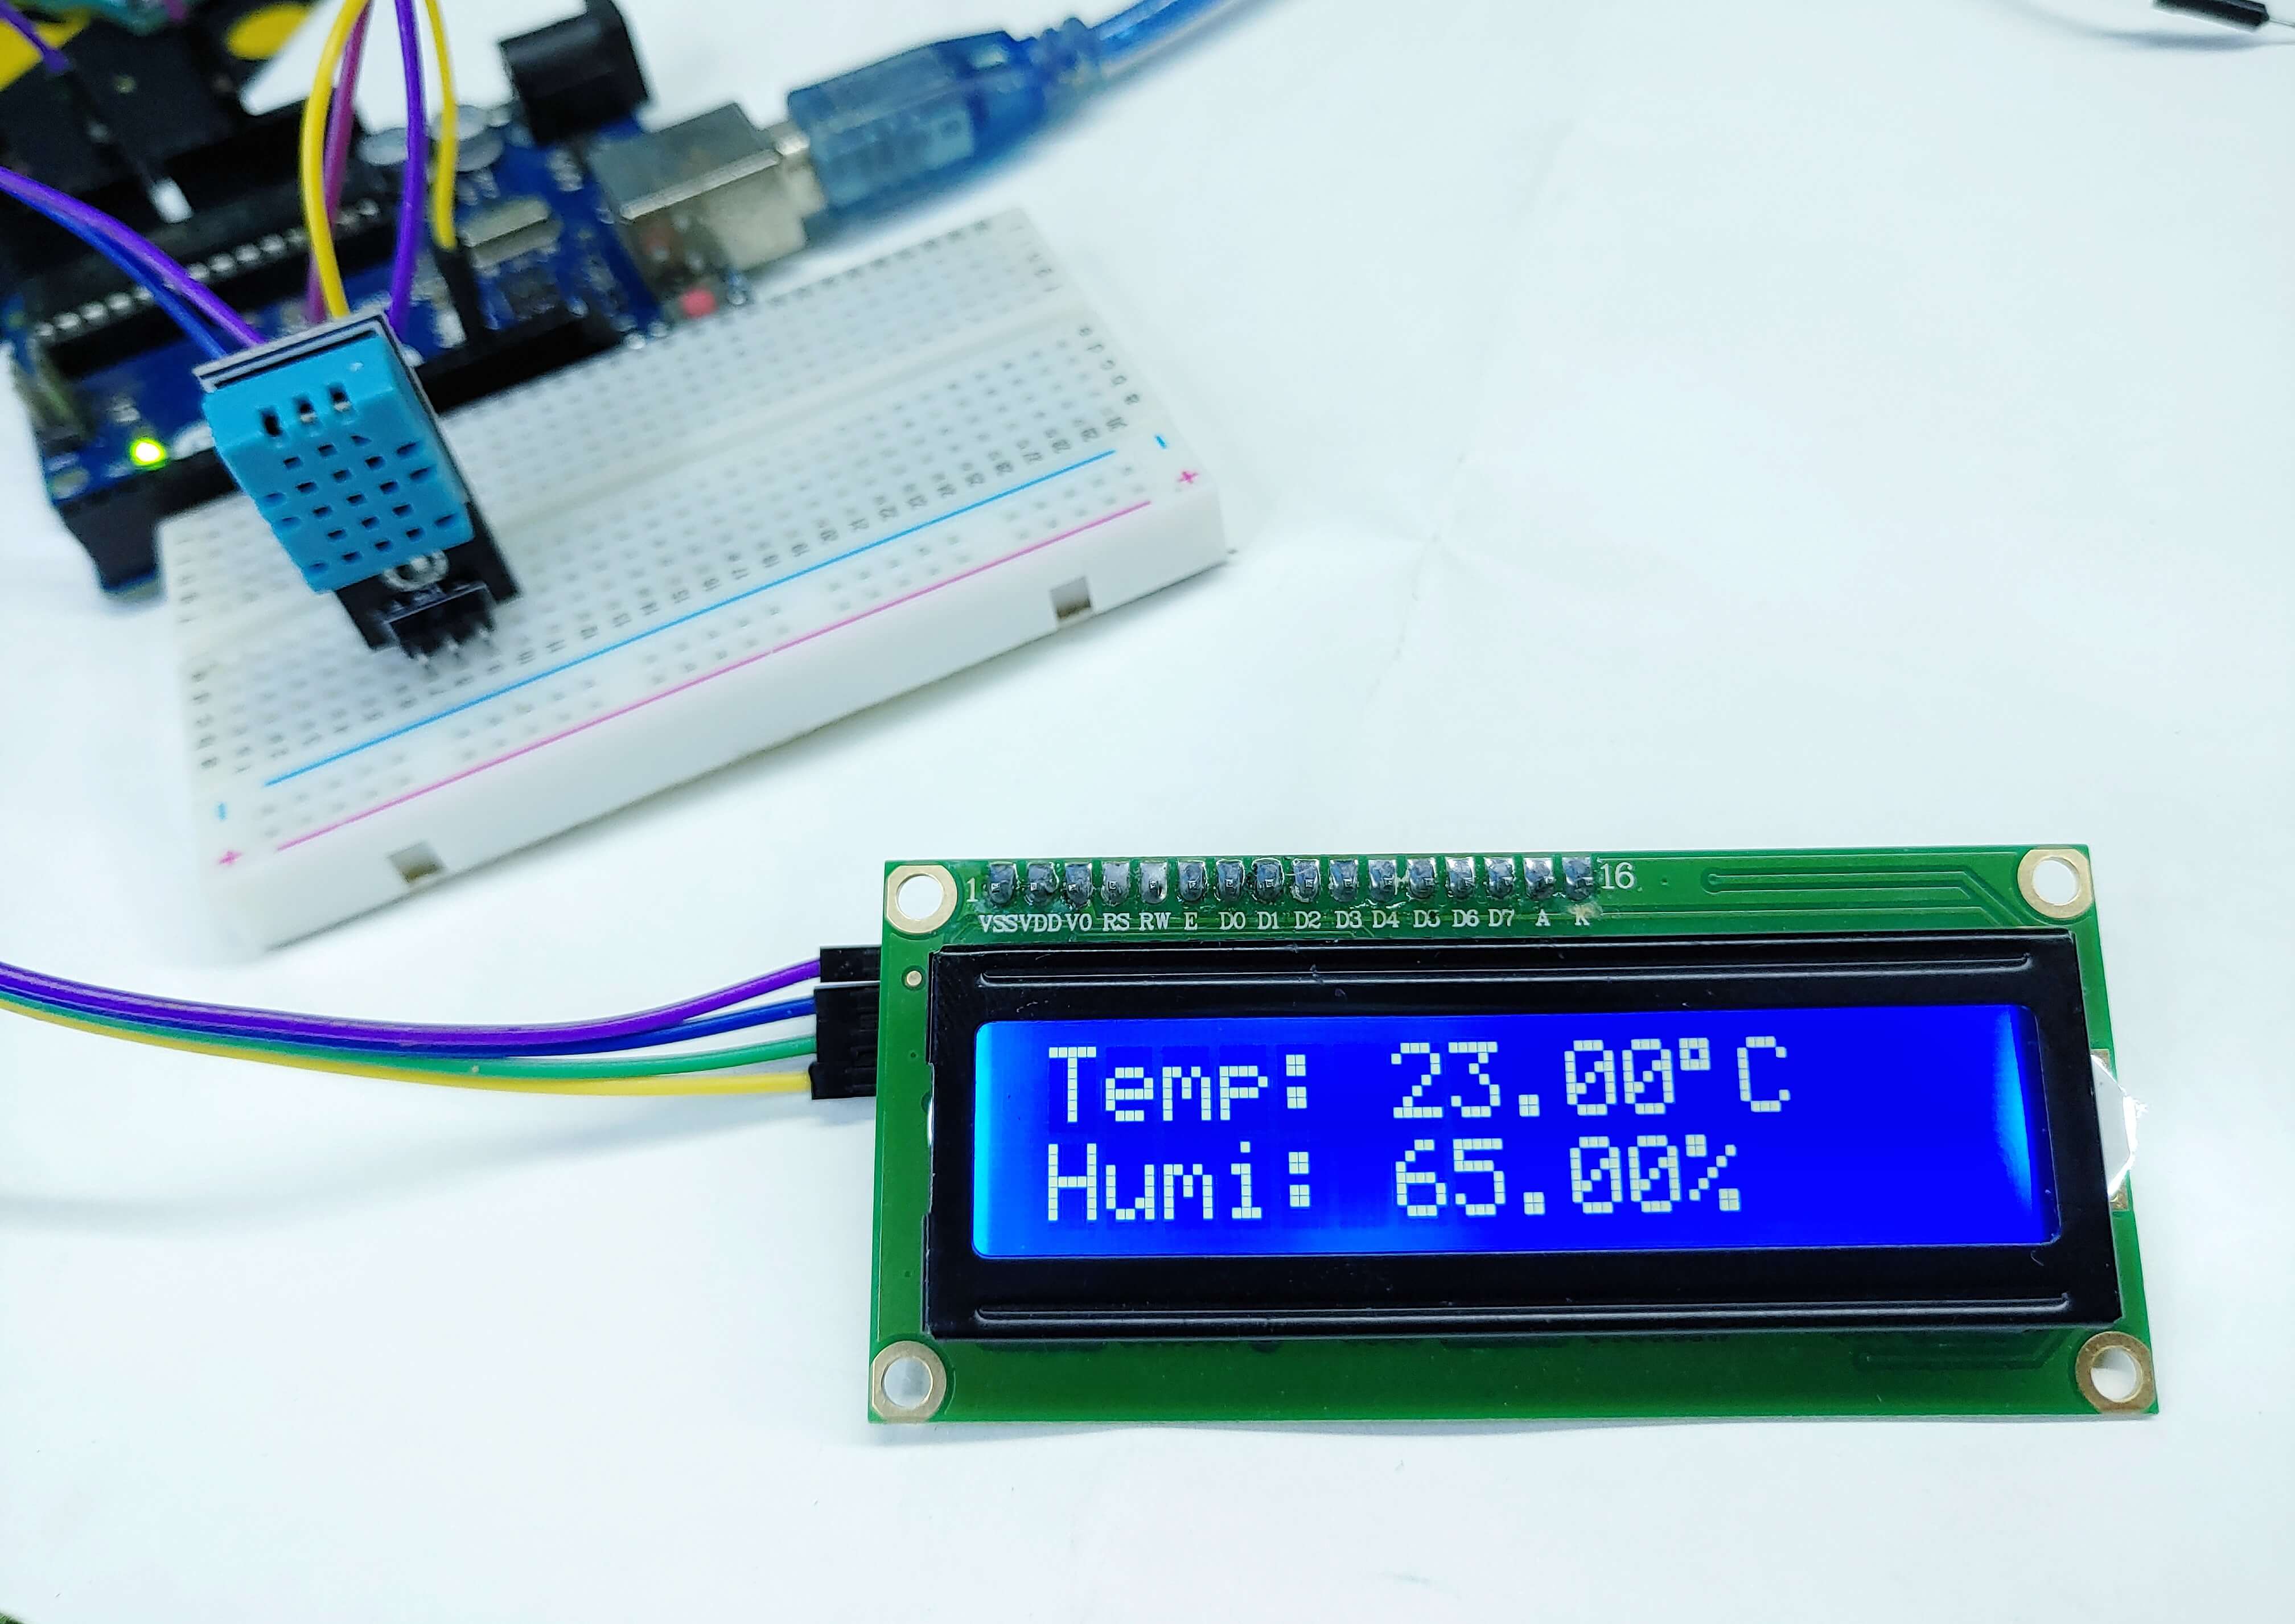 Arduino - Temperature Humidity Sensor